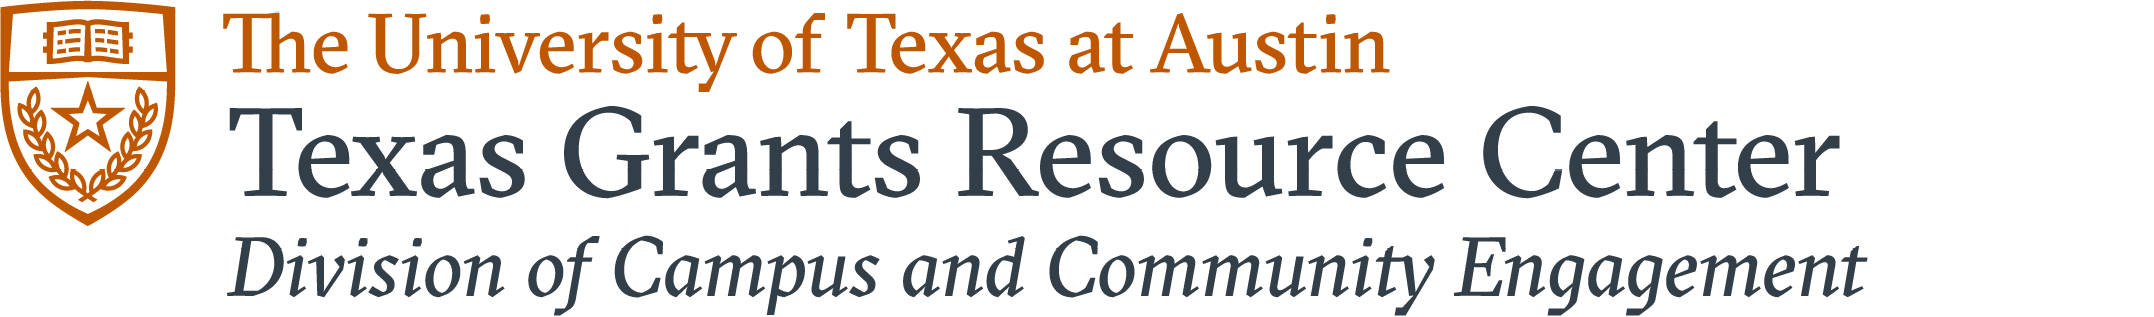 Texas Grant Resource Center